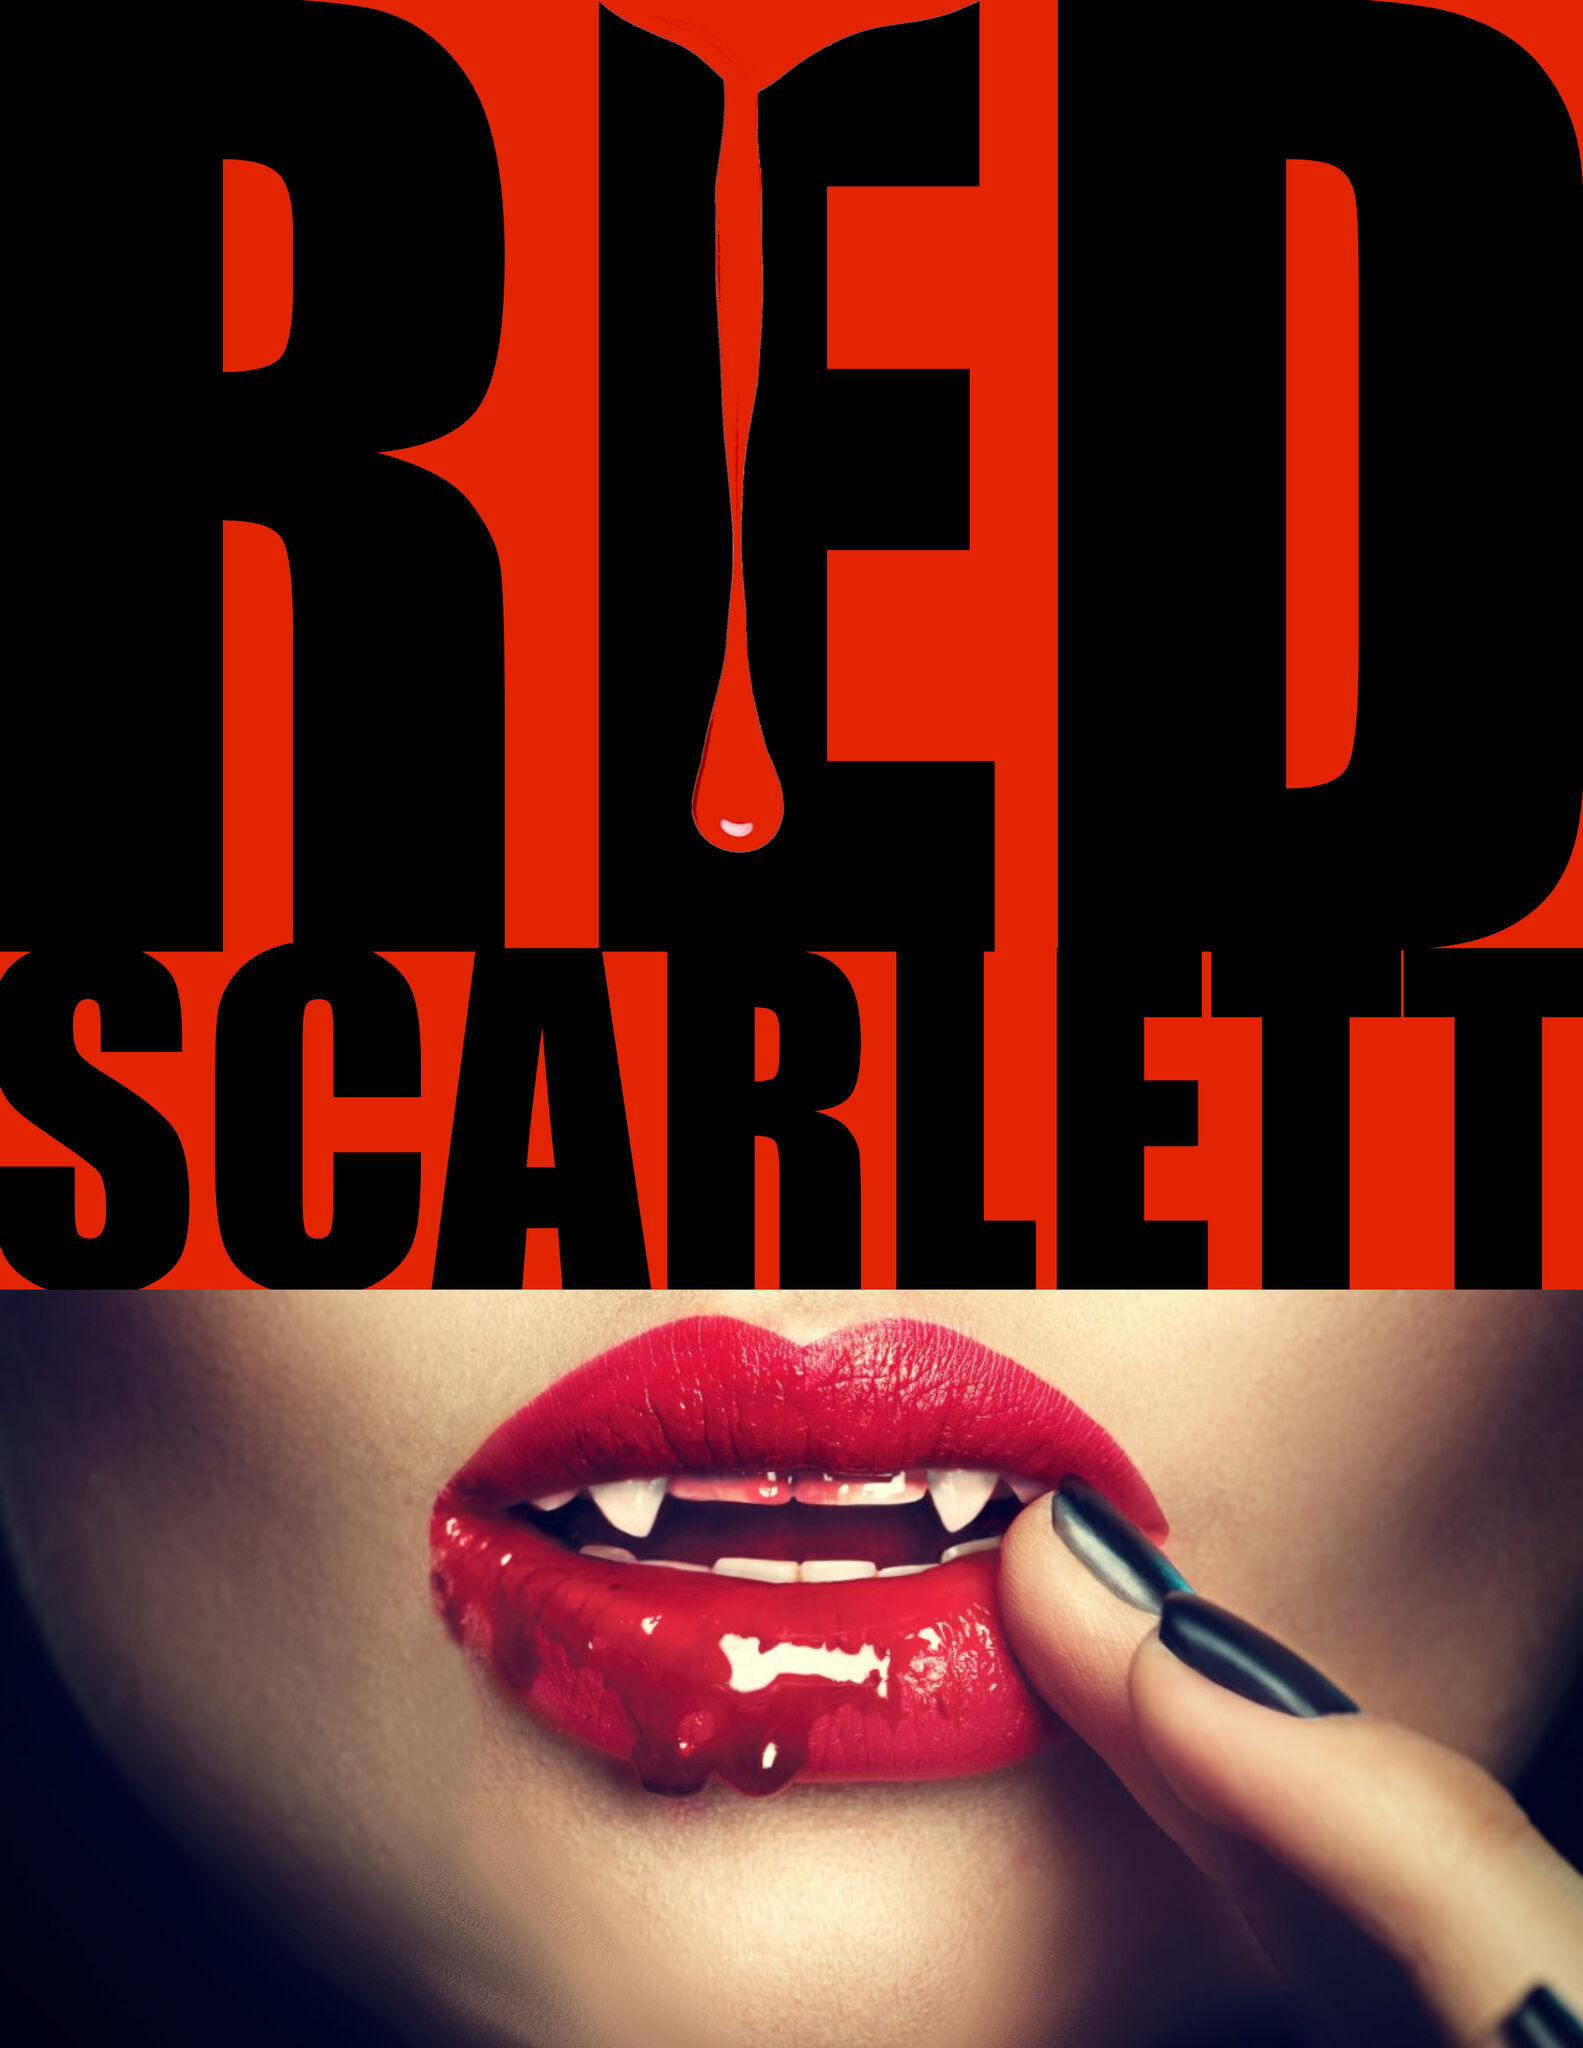 Red Scarlett